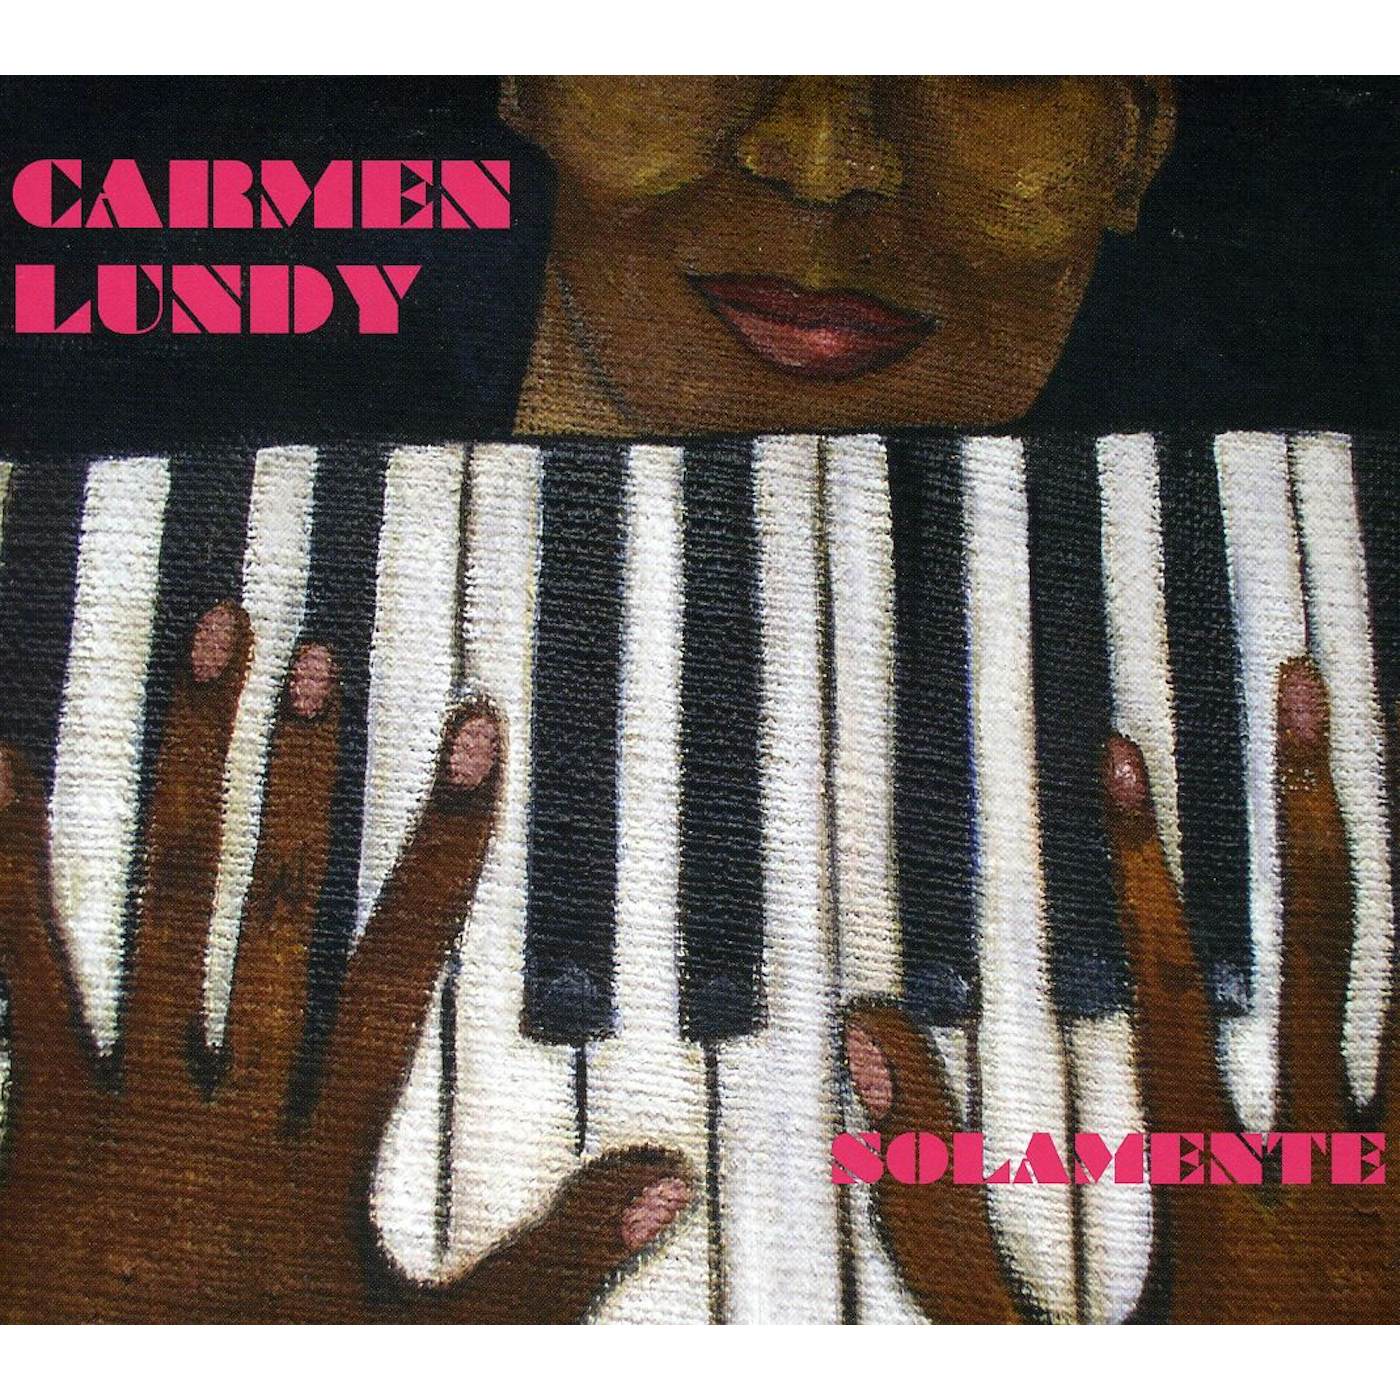 Carmen Lundy SOLAMENTE CD